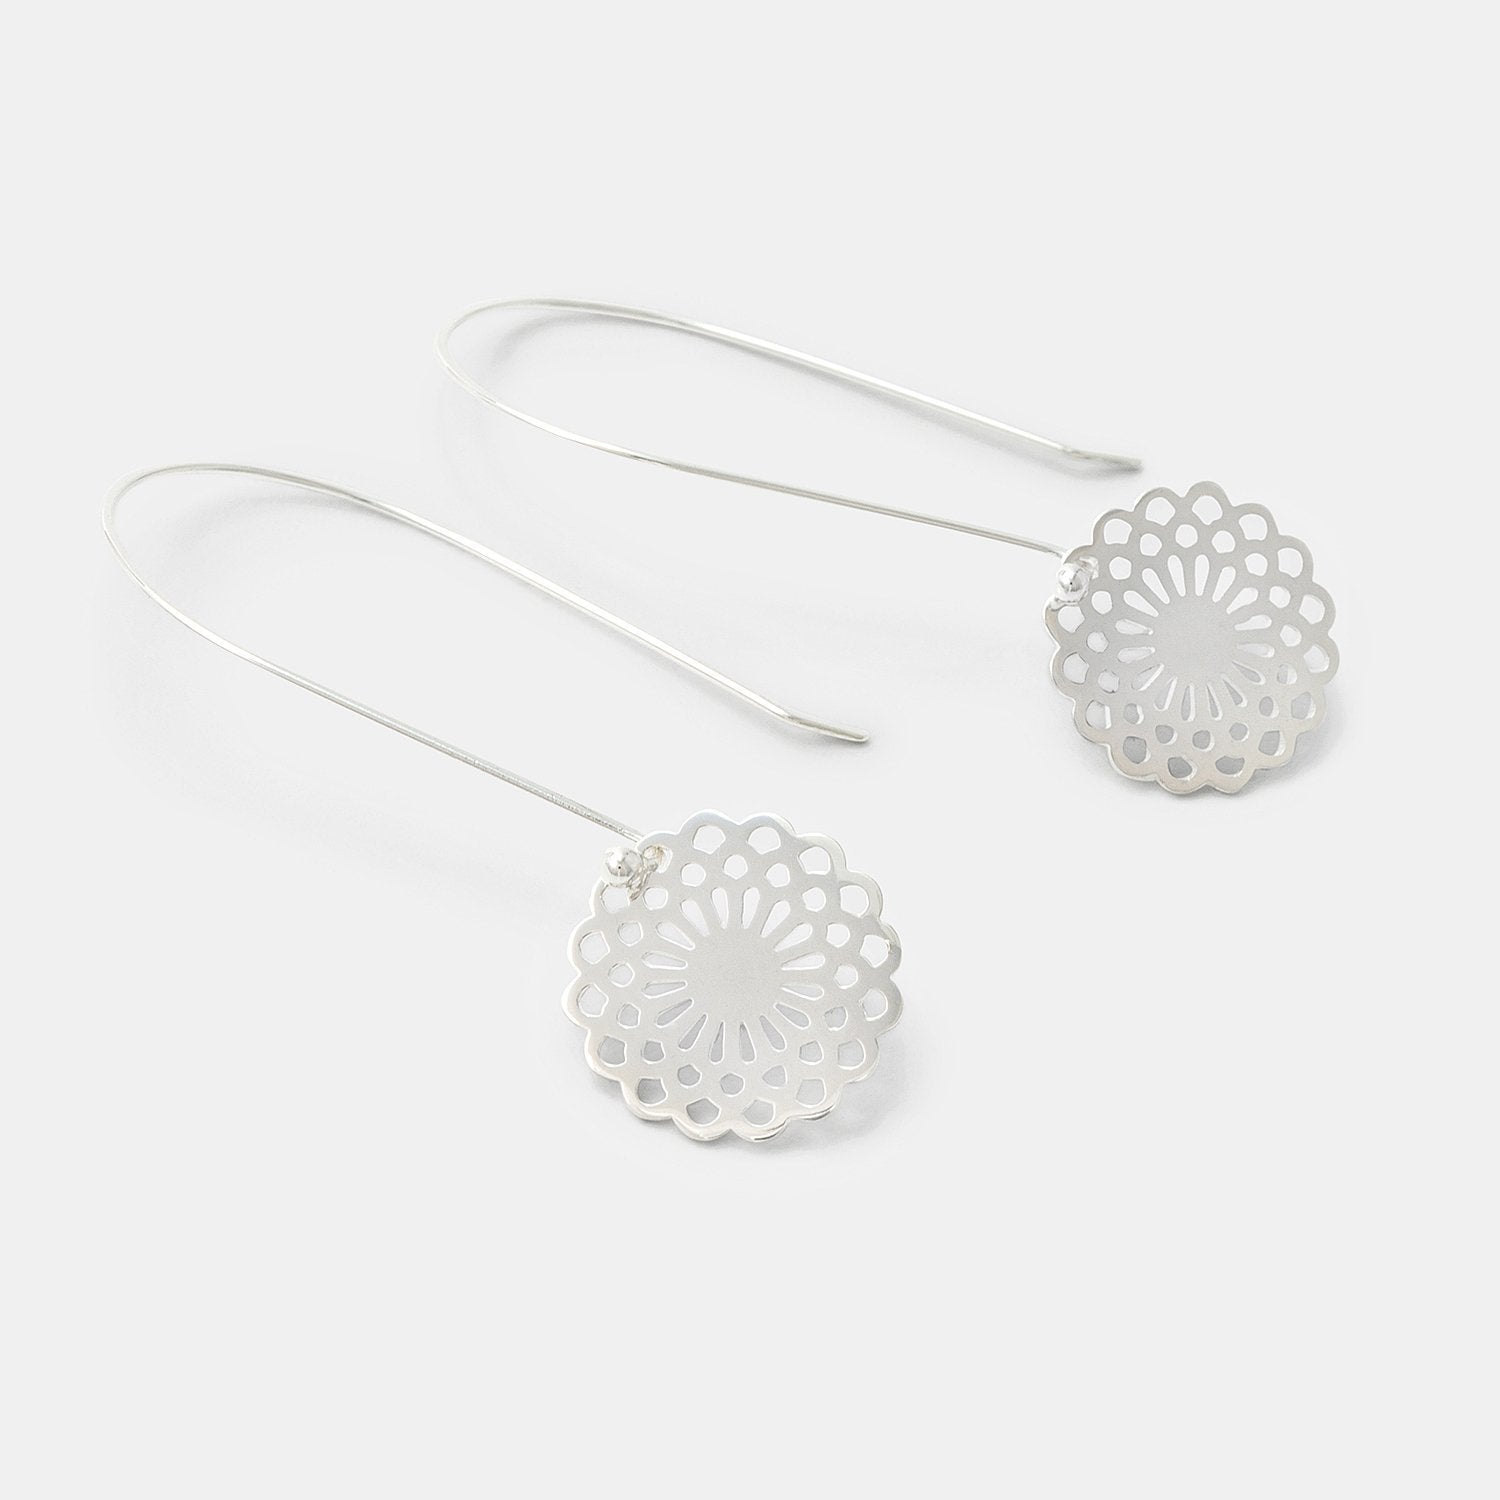 Dahlia dangle earrings - Simone Walsh Jewellery Australia